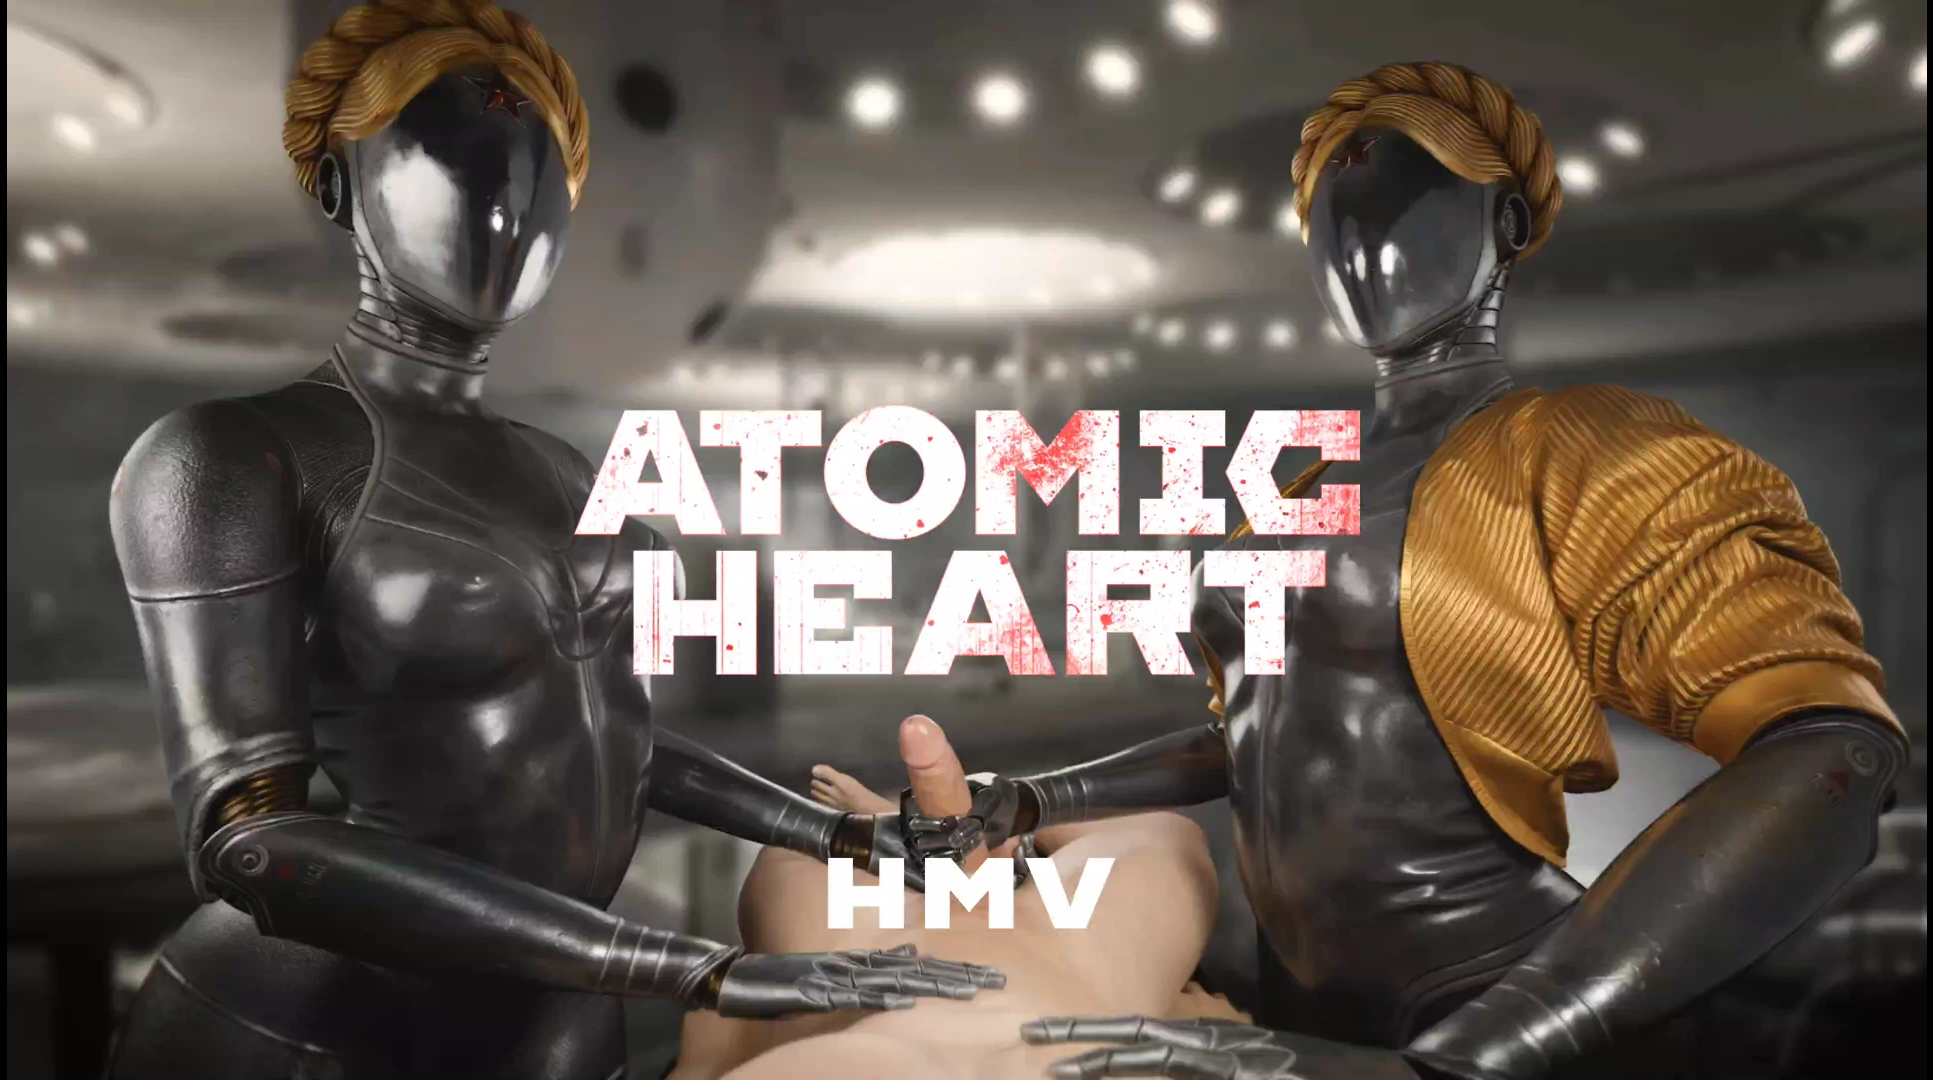 Atomic heart 6 hour porn